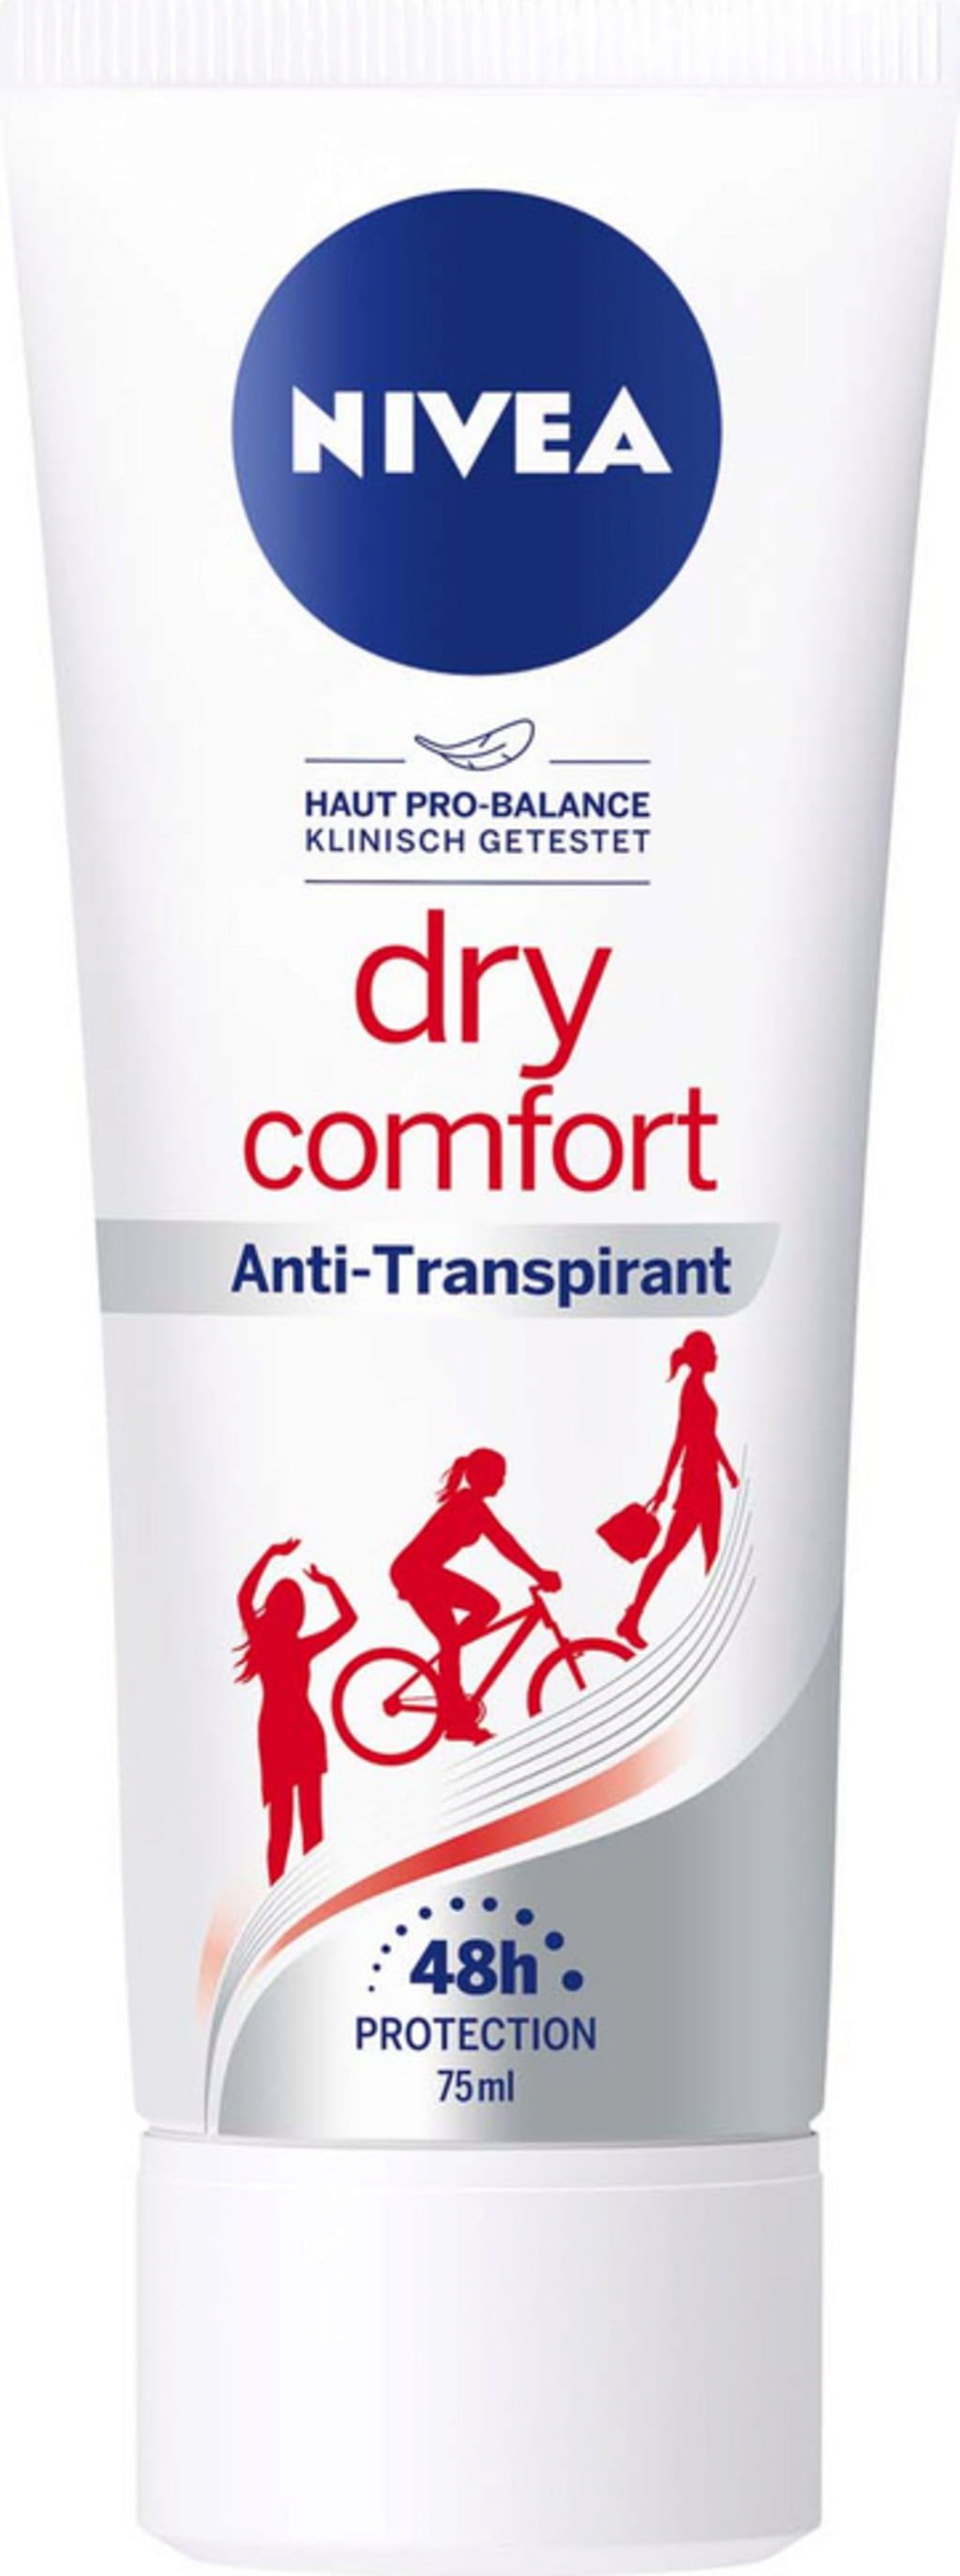 NIVEA Dry Comfort Deo Creme Anti-Transpirante, 75 ml - oh feliz Onlineshop  Portugal